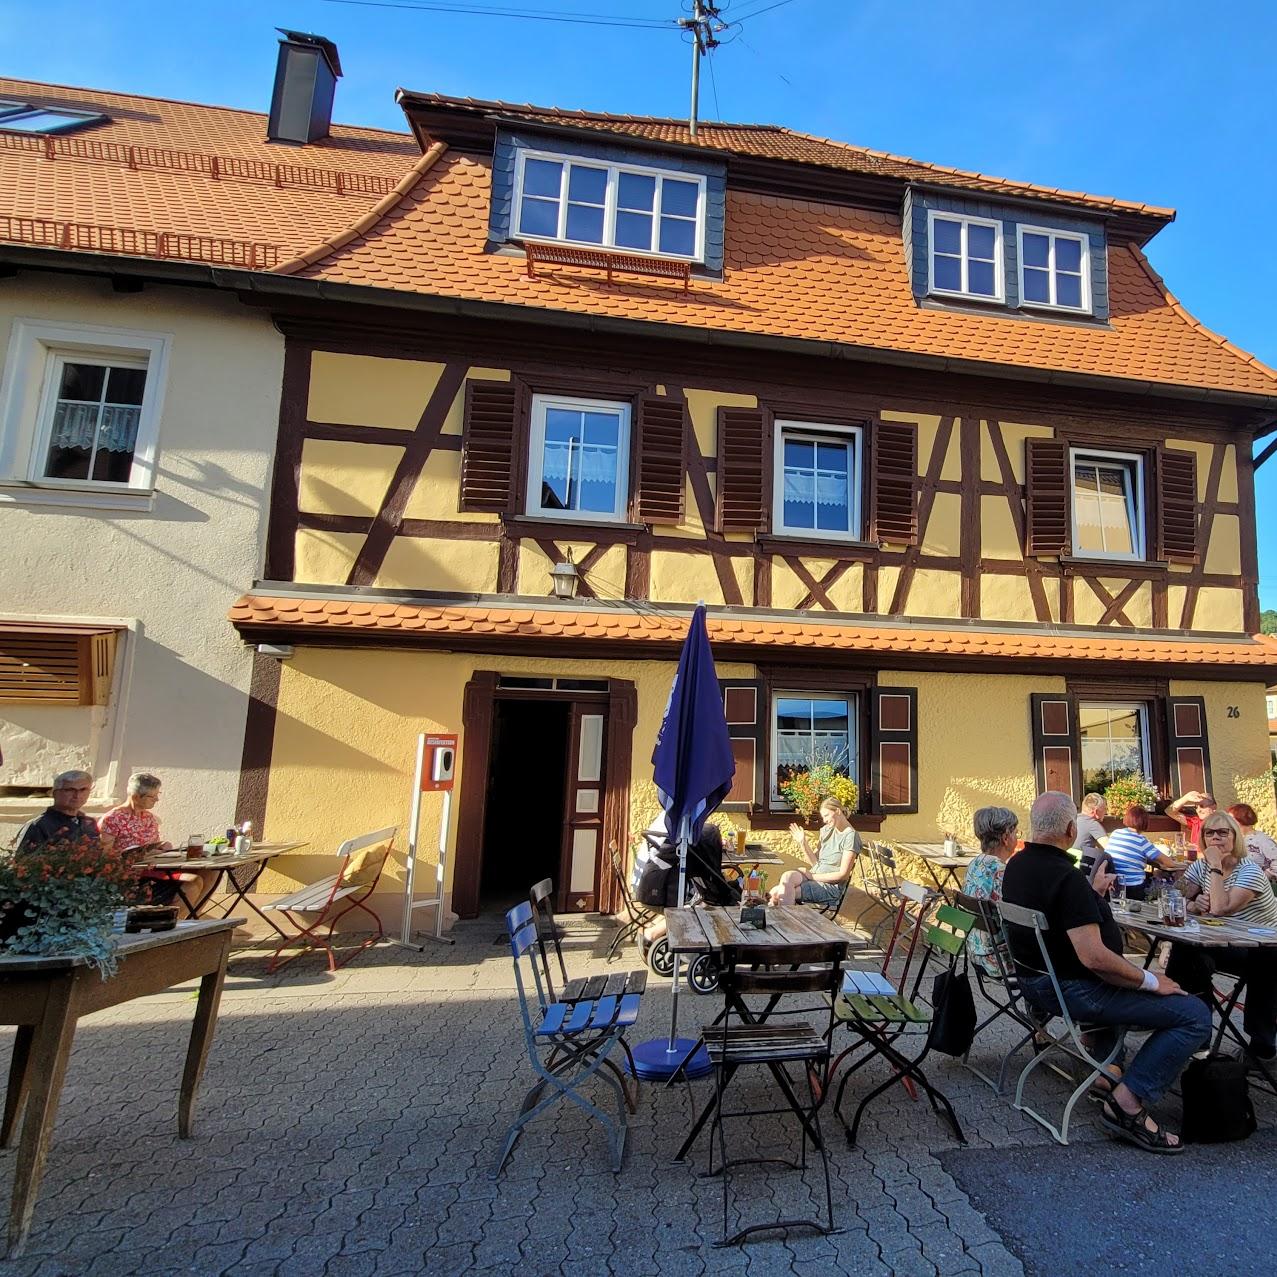 Restaurant "Brauerei Först" in Eggolsheim